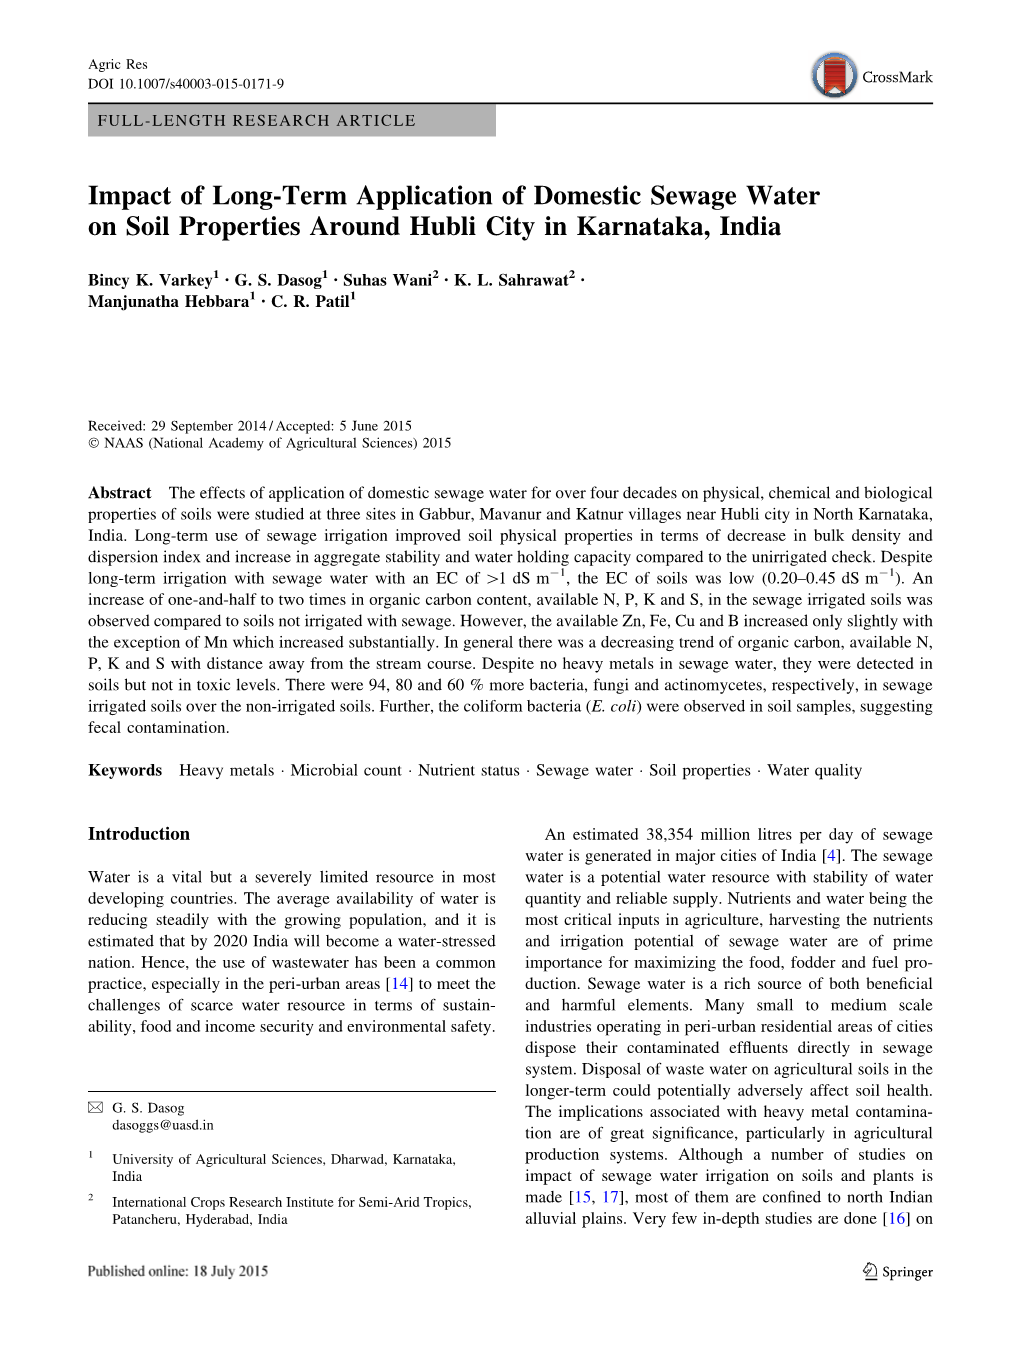 Impact of Long-Term Application of Domestic Sewage Water on Soil Properties Around Hubli City in Karnataka, India